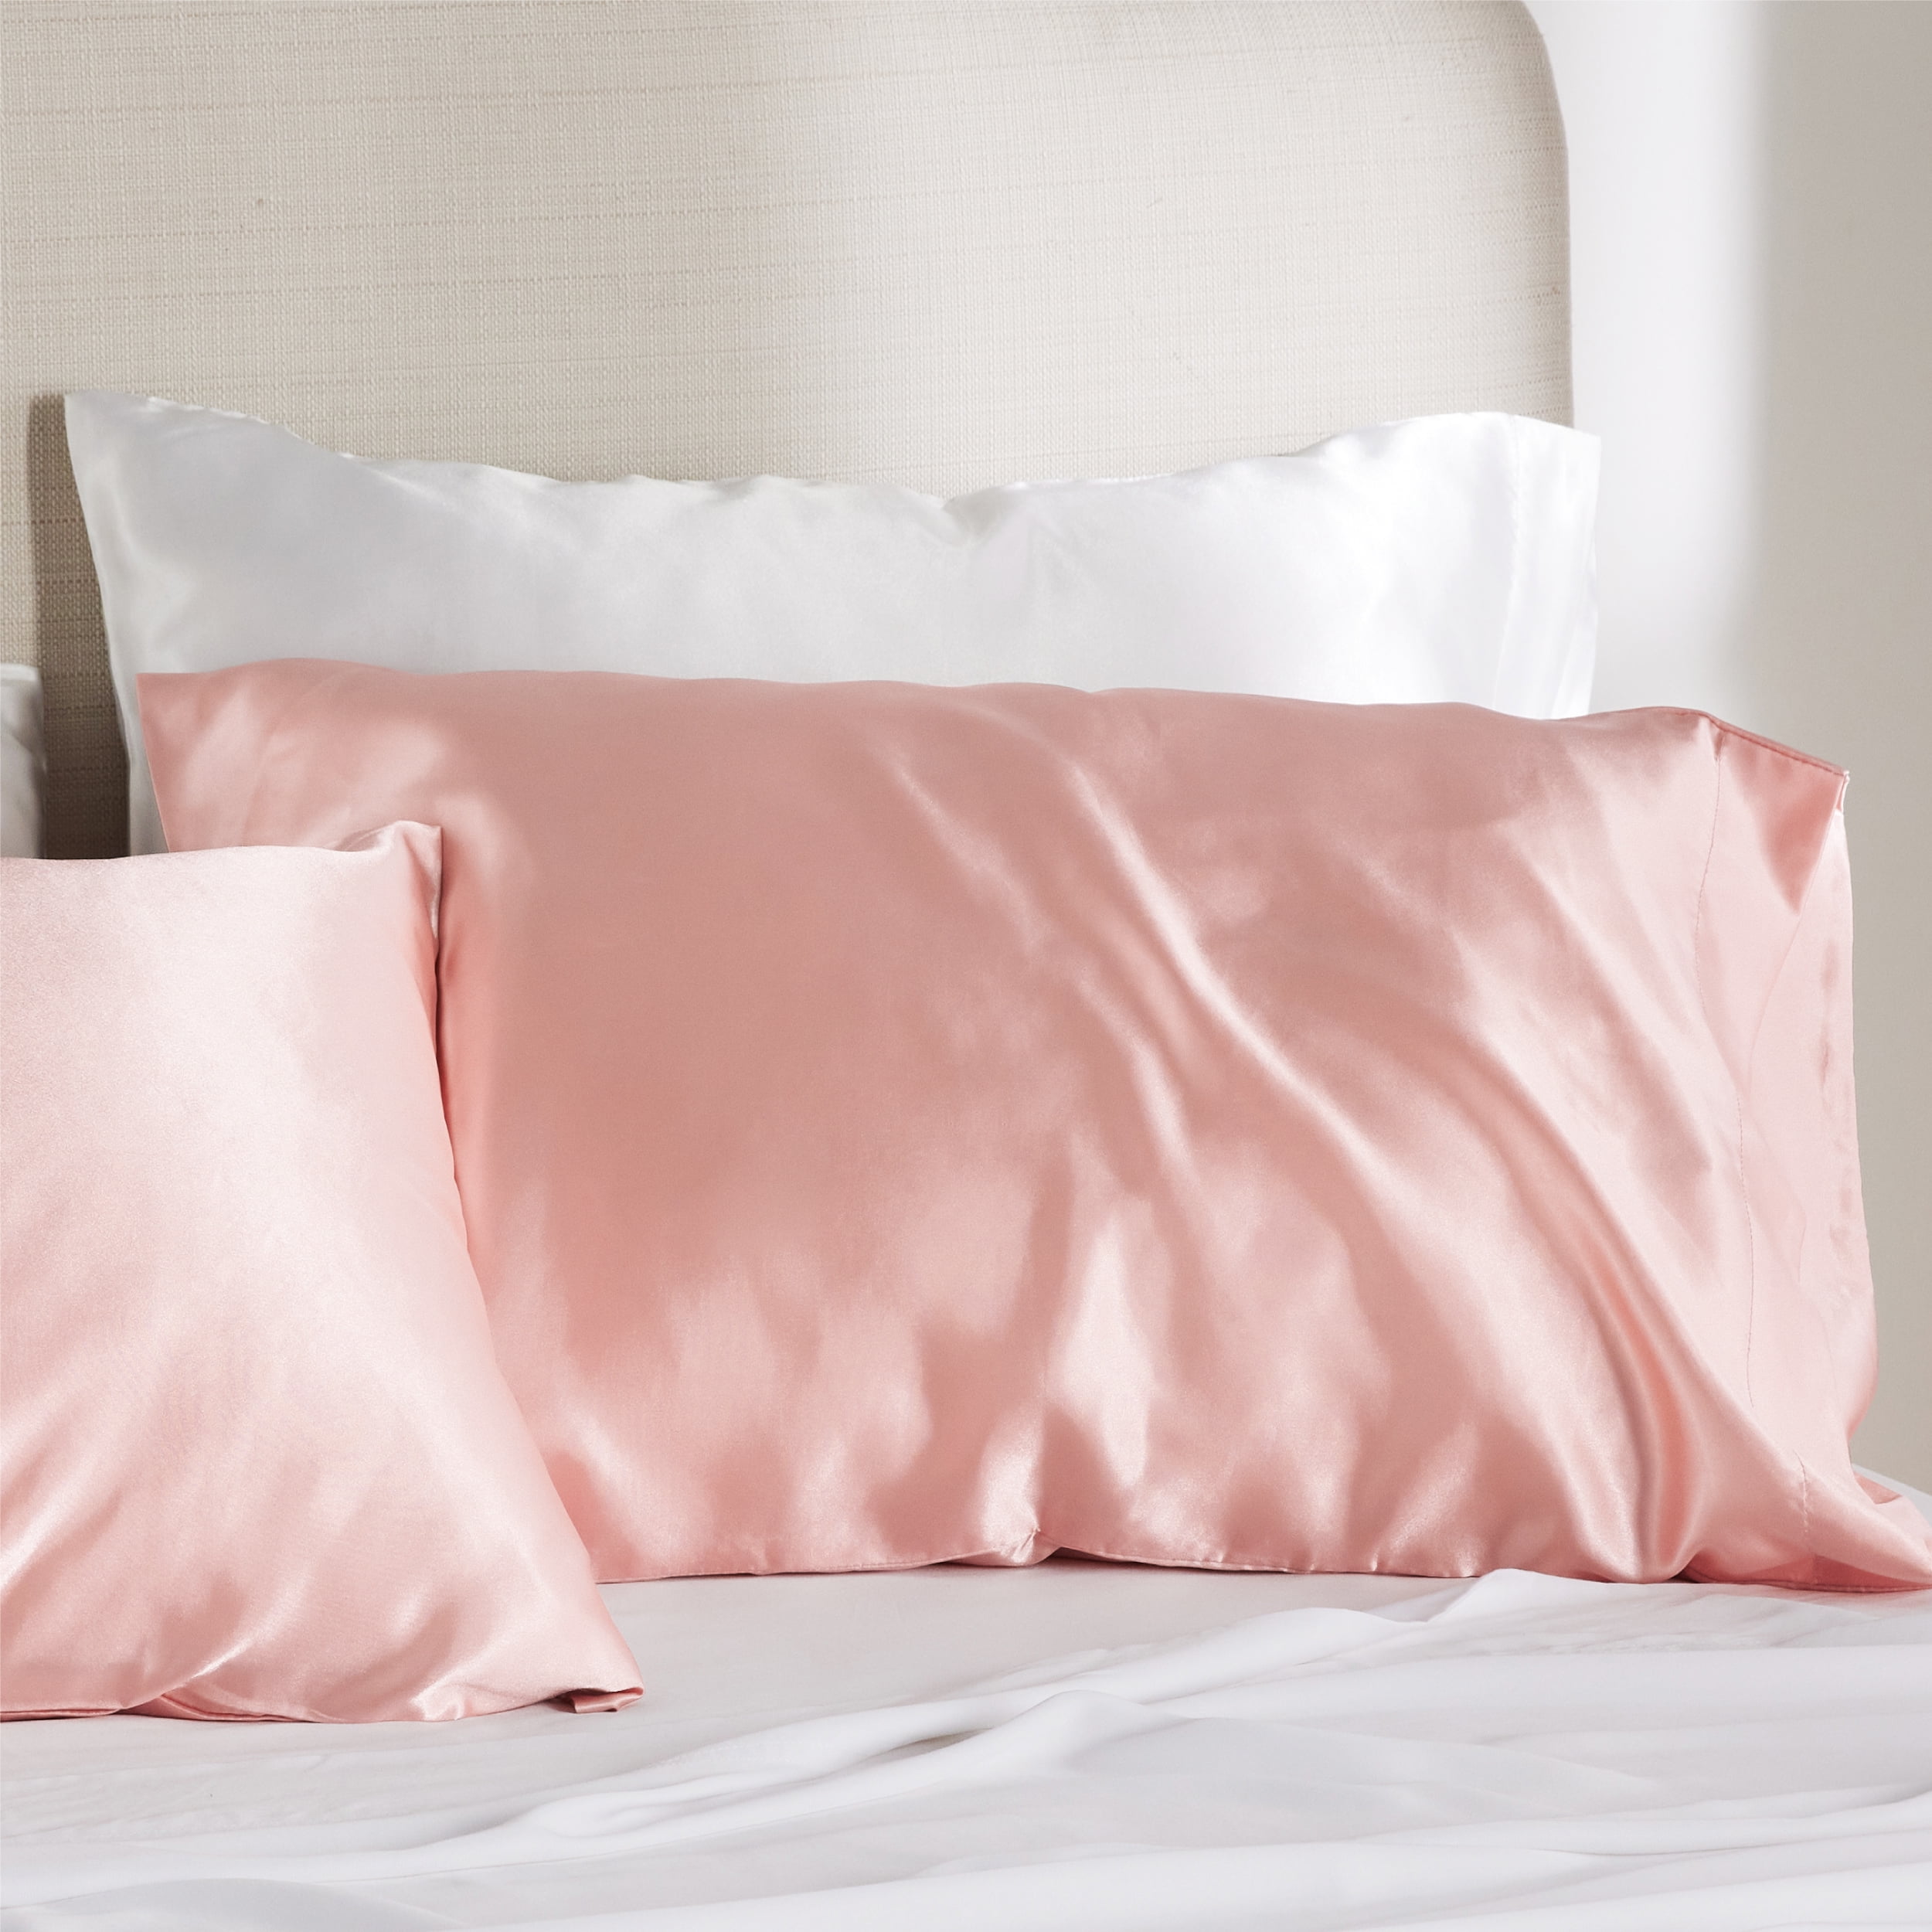 Blush Satin Pillowcase - Standard size